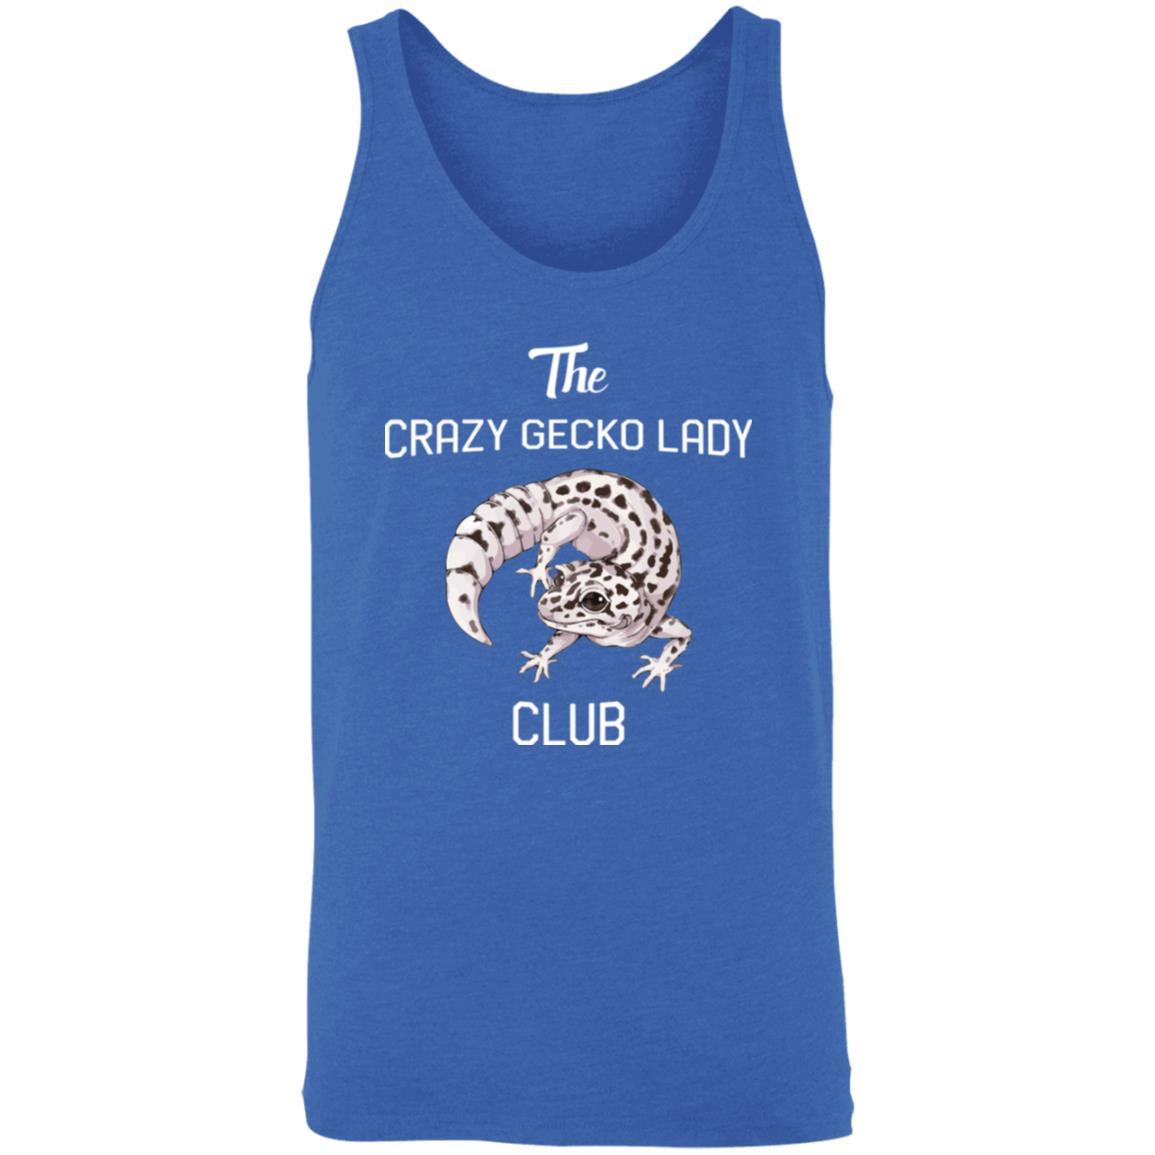 The Crazy Gecko Lady Club - Unisex Tank